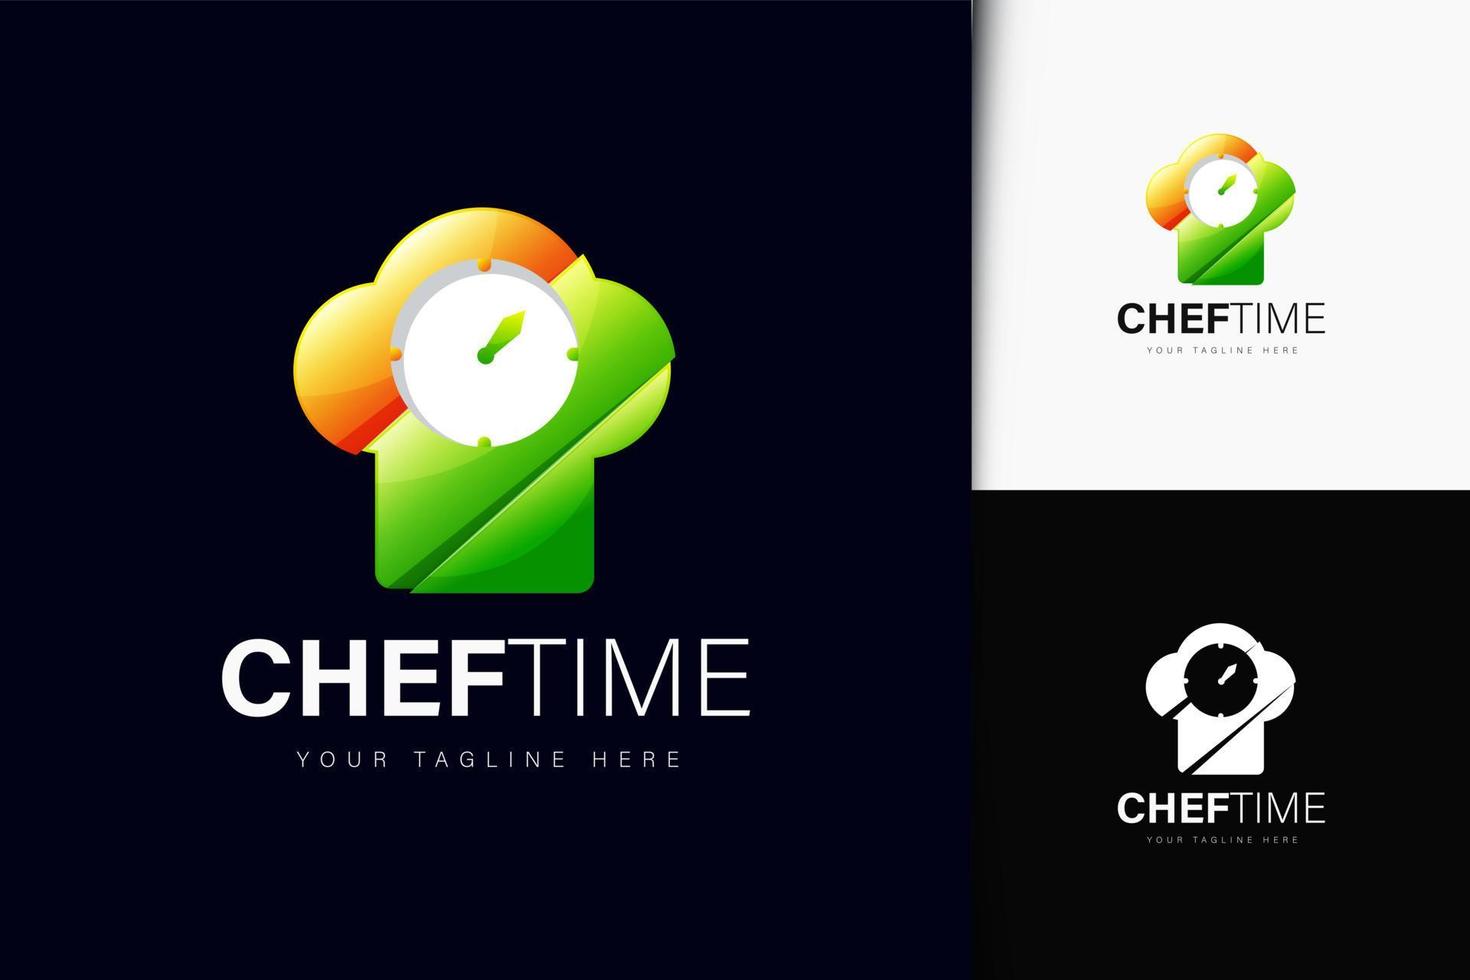 diseño de logotipo de chef time con degradado vector